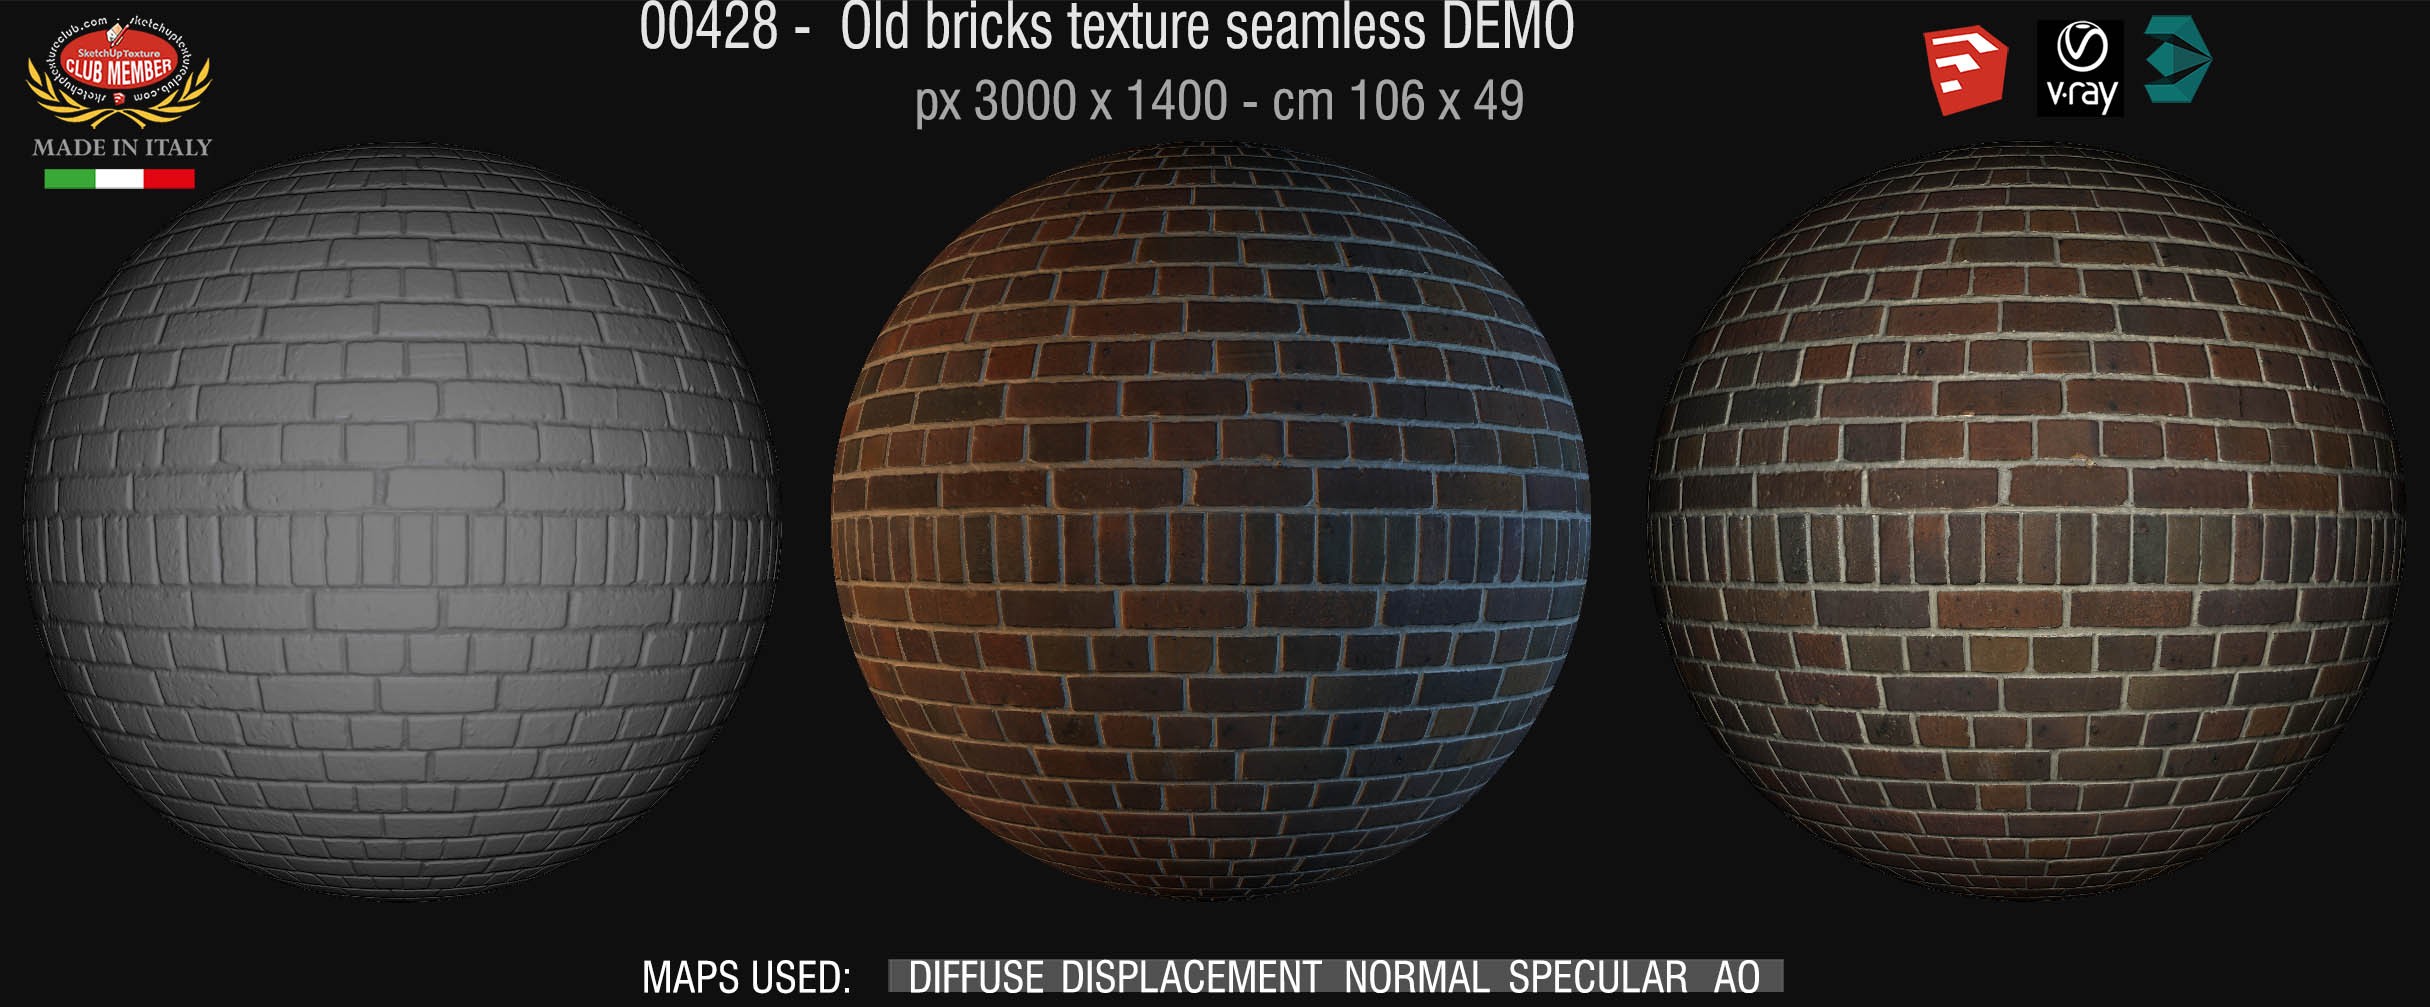 00428 Old bricks texture seamless + maps DEMO